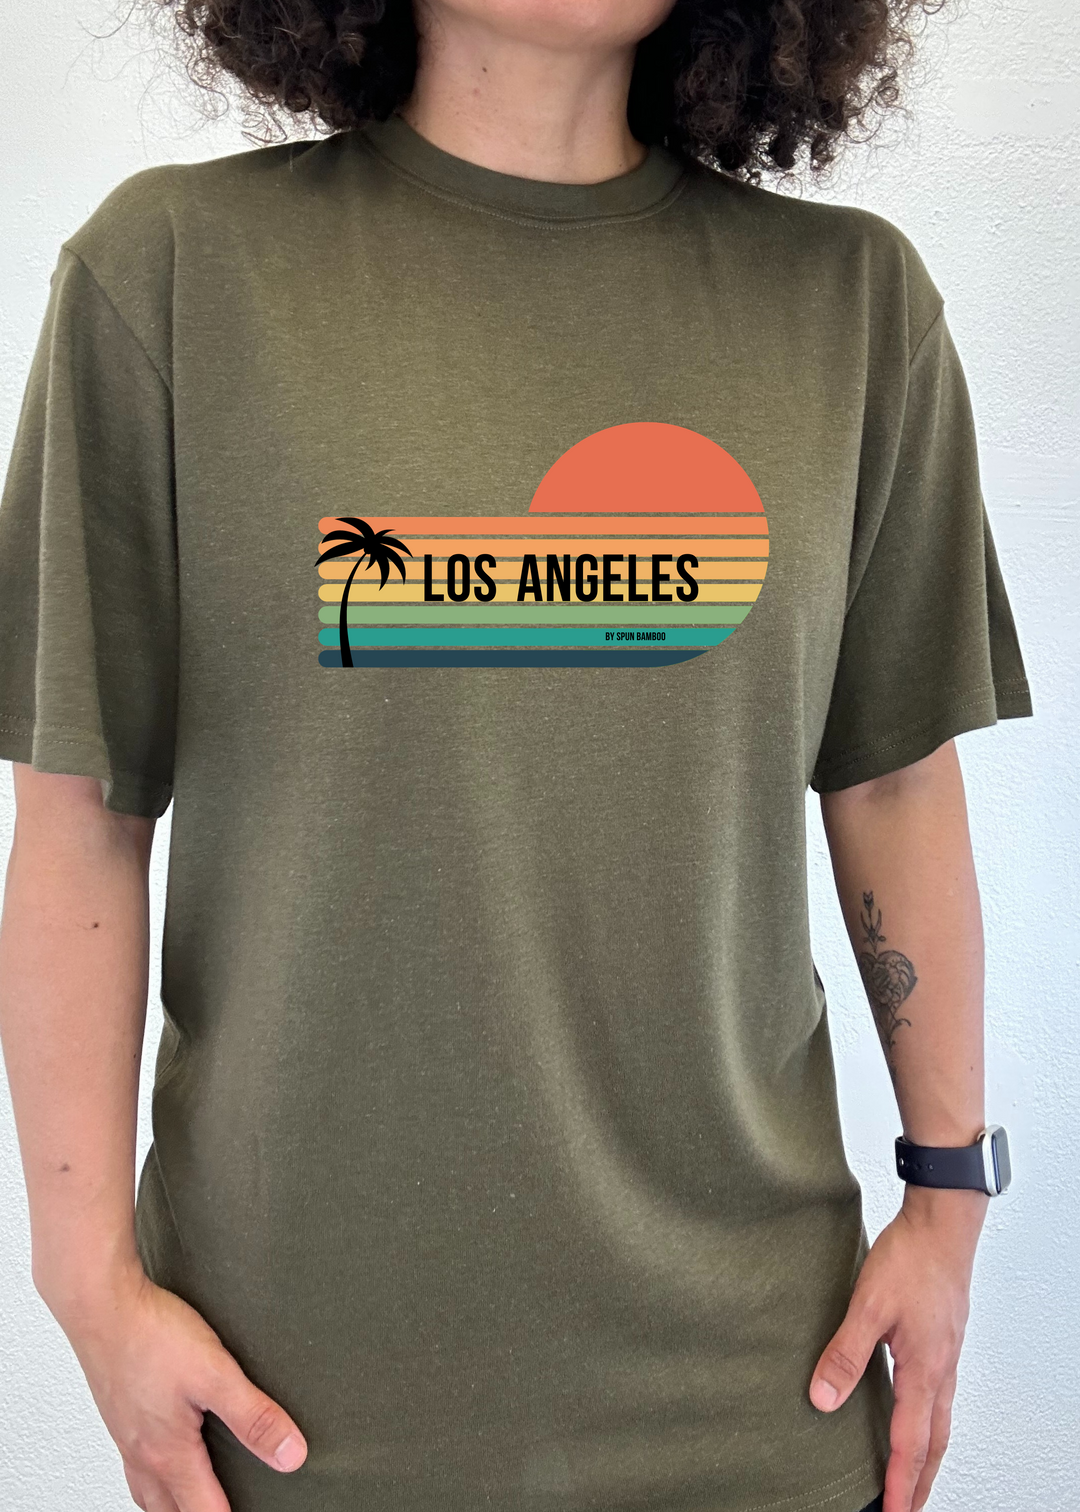 Los Angeles Spun Bamboo Unisex Bamboo Viscose/Organic Cotton Short Sleeve Graphic T-Shirt